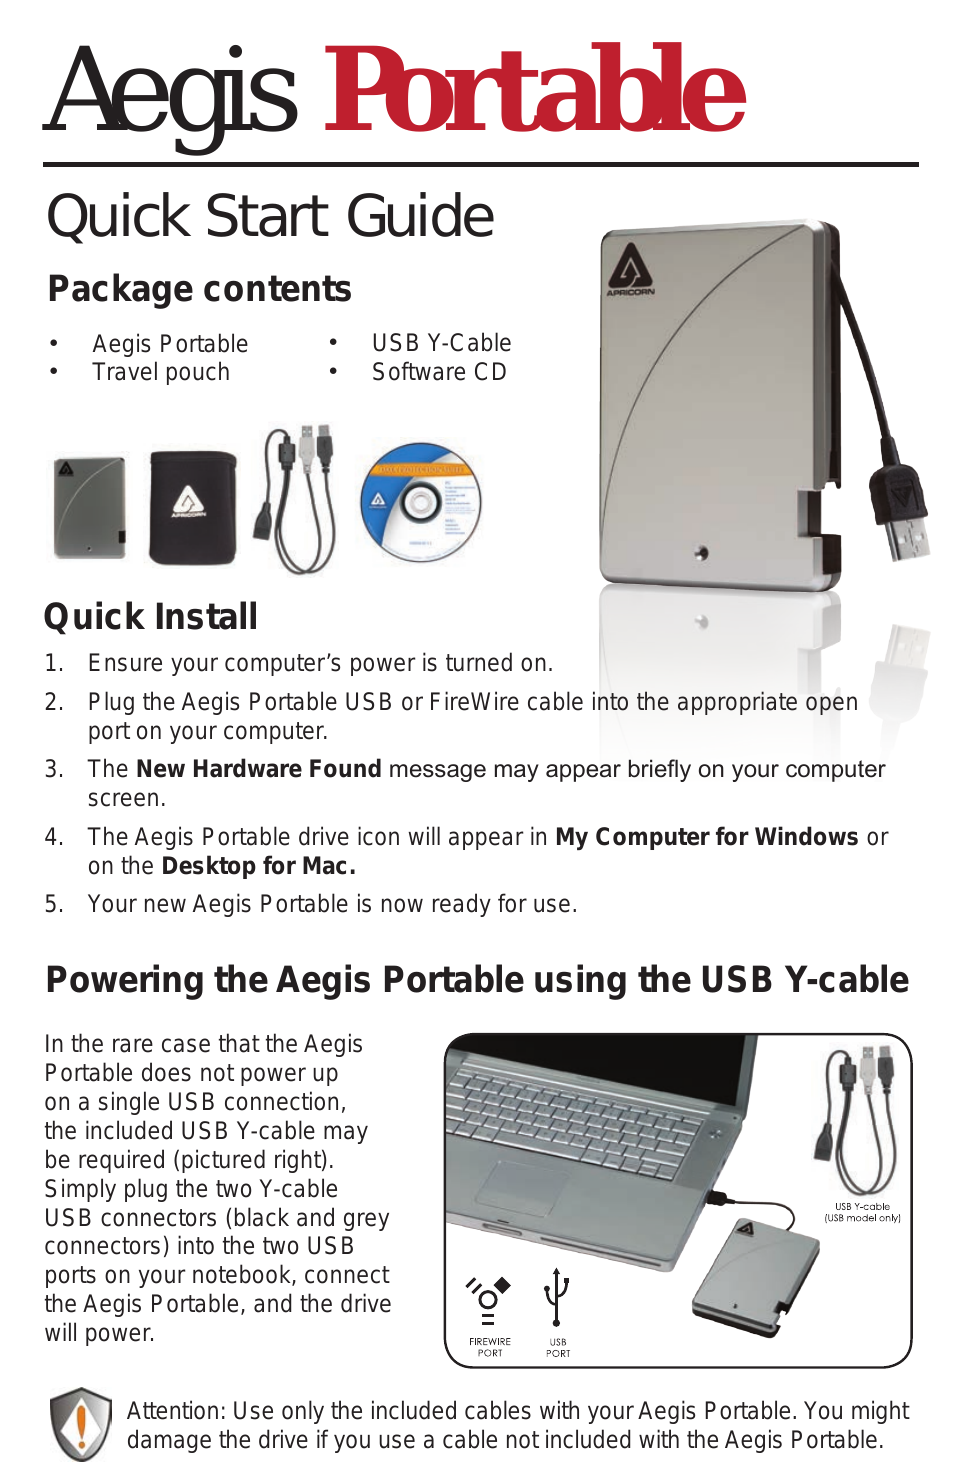 Aegis Portable 2.5" External USB 2.0 Hard Drive